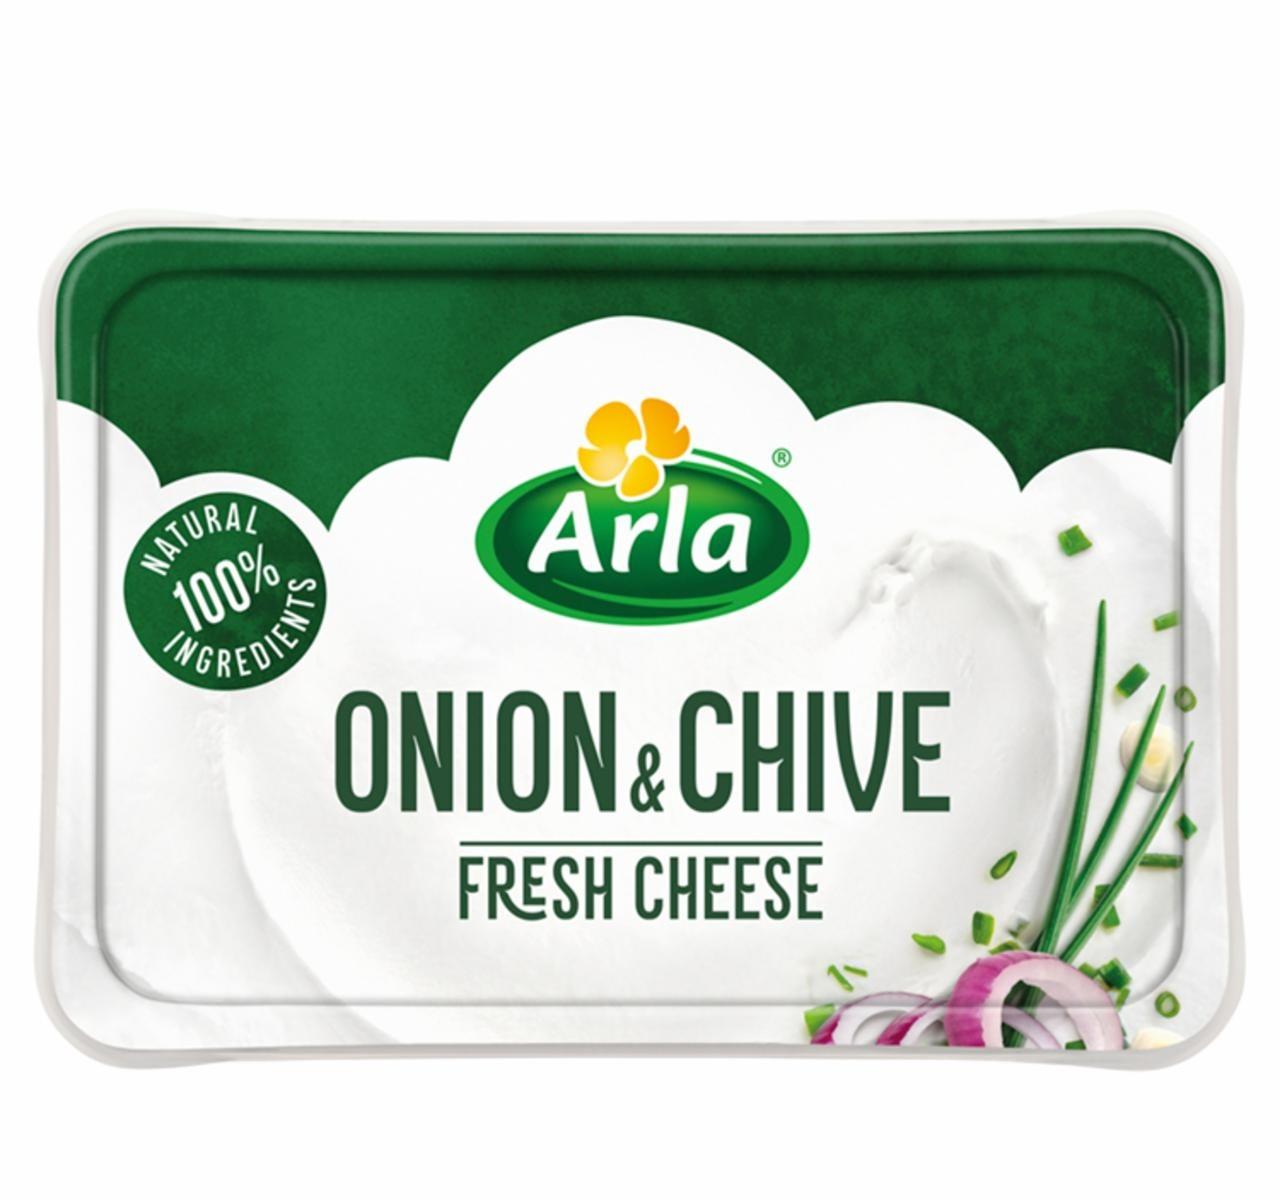 Fotografie - Onion & Chive Fresh Cheese Arla